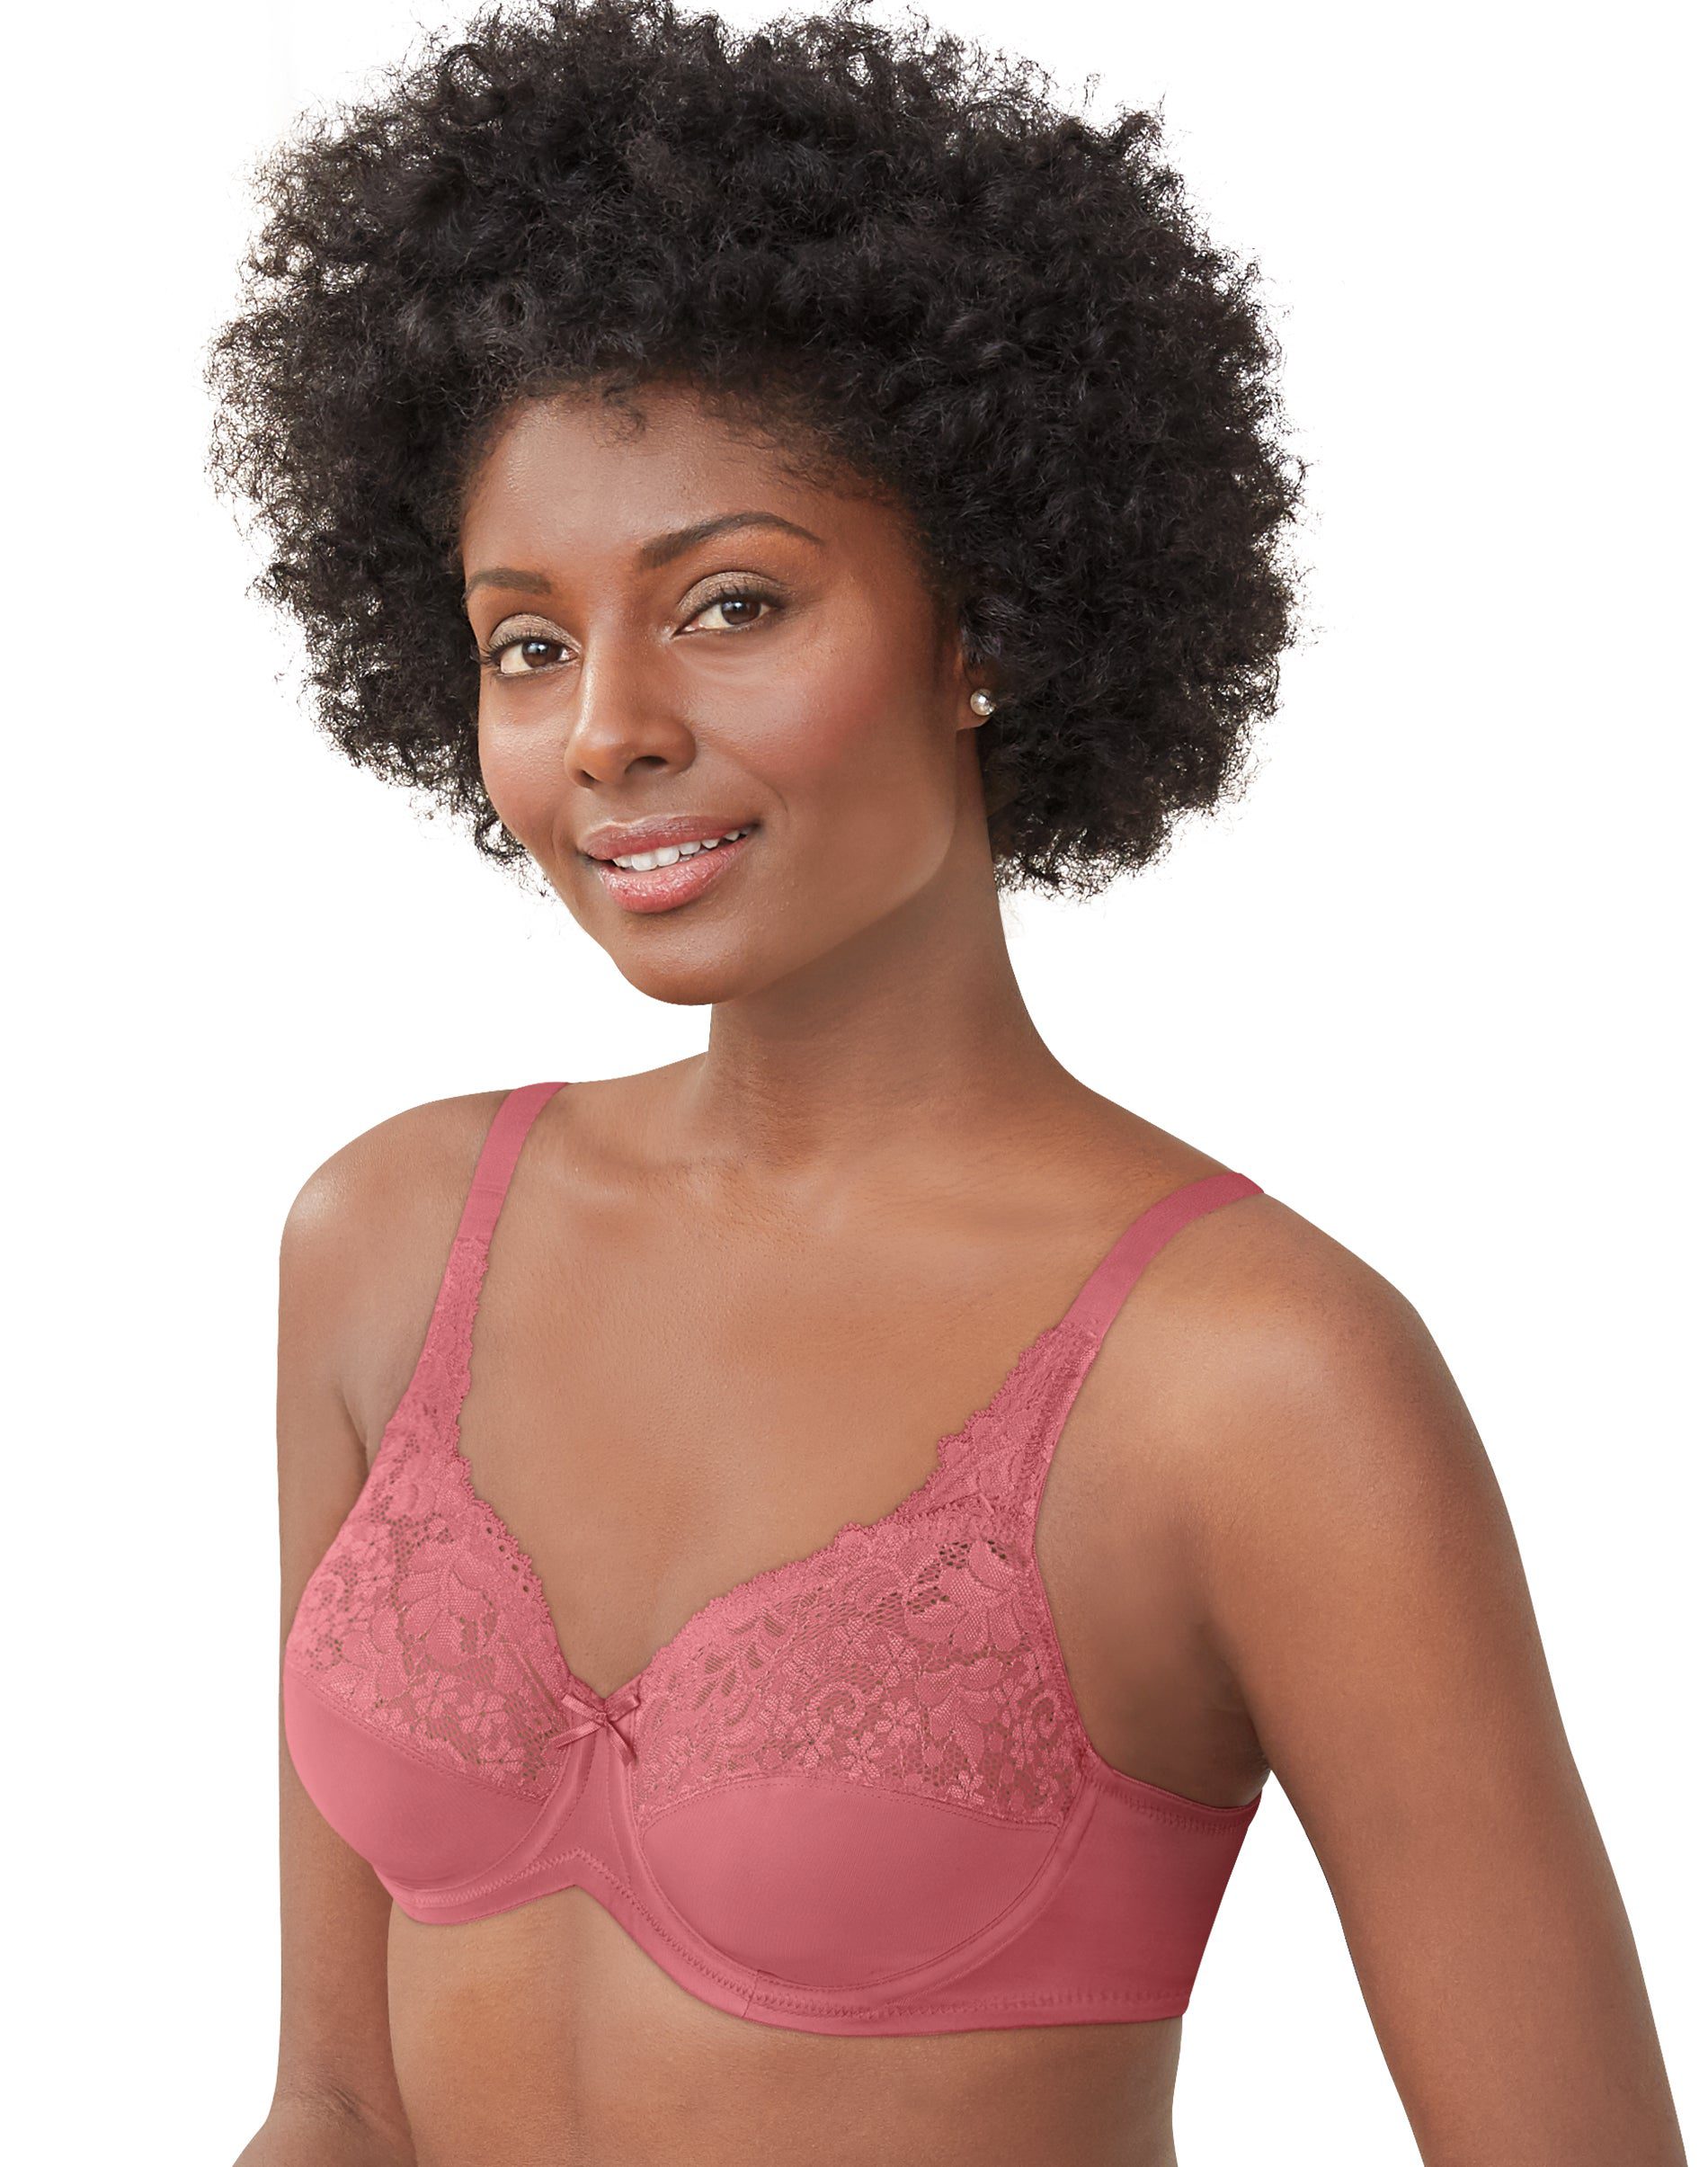 Lilyette Beautiful Support Lace Minimizer Bra, 34C, Pink Quartz